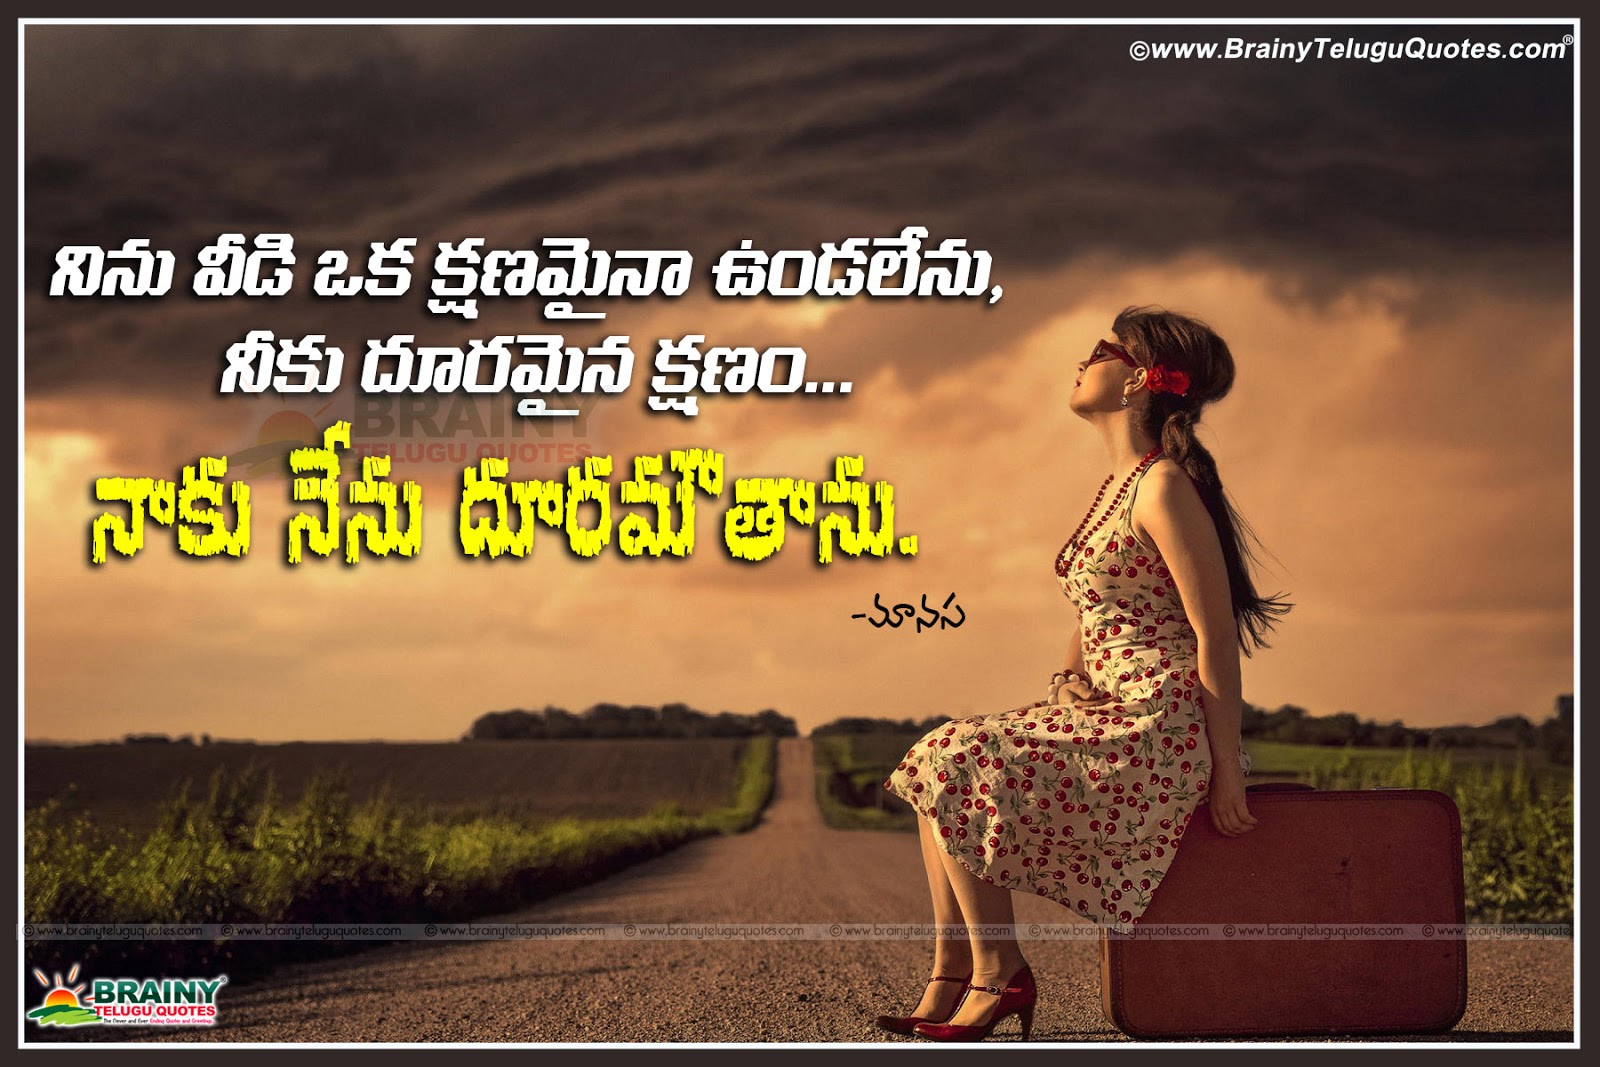 Telugu True Love Never Breakup Quotations Sayings Telugu Love